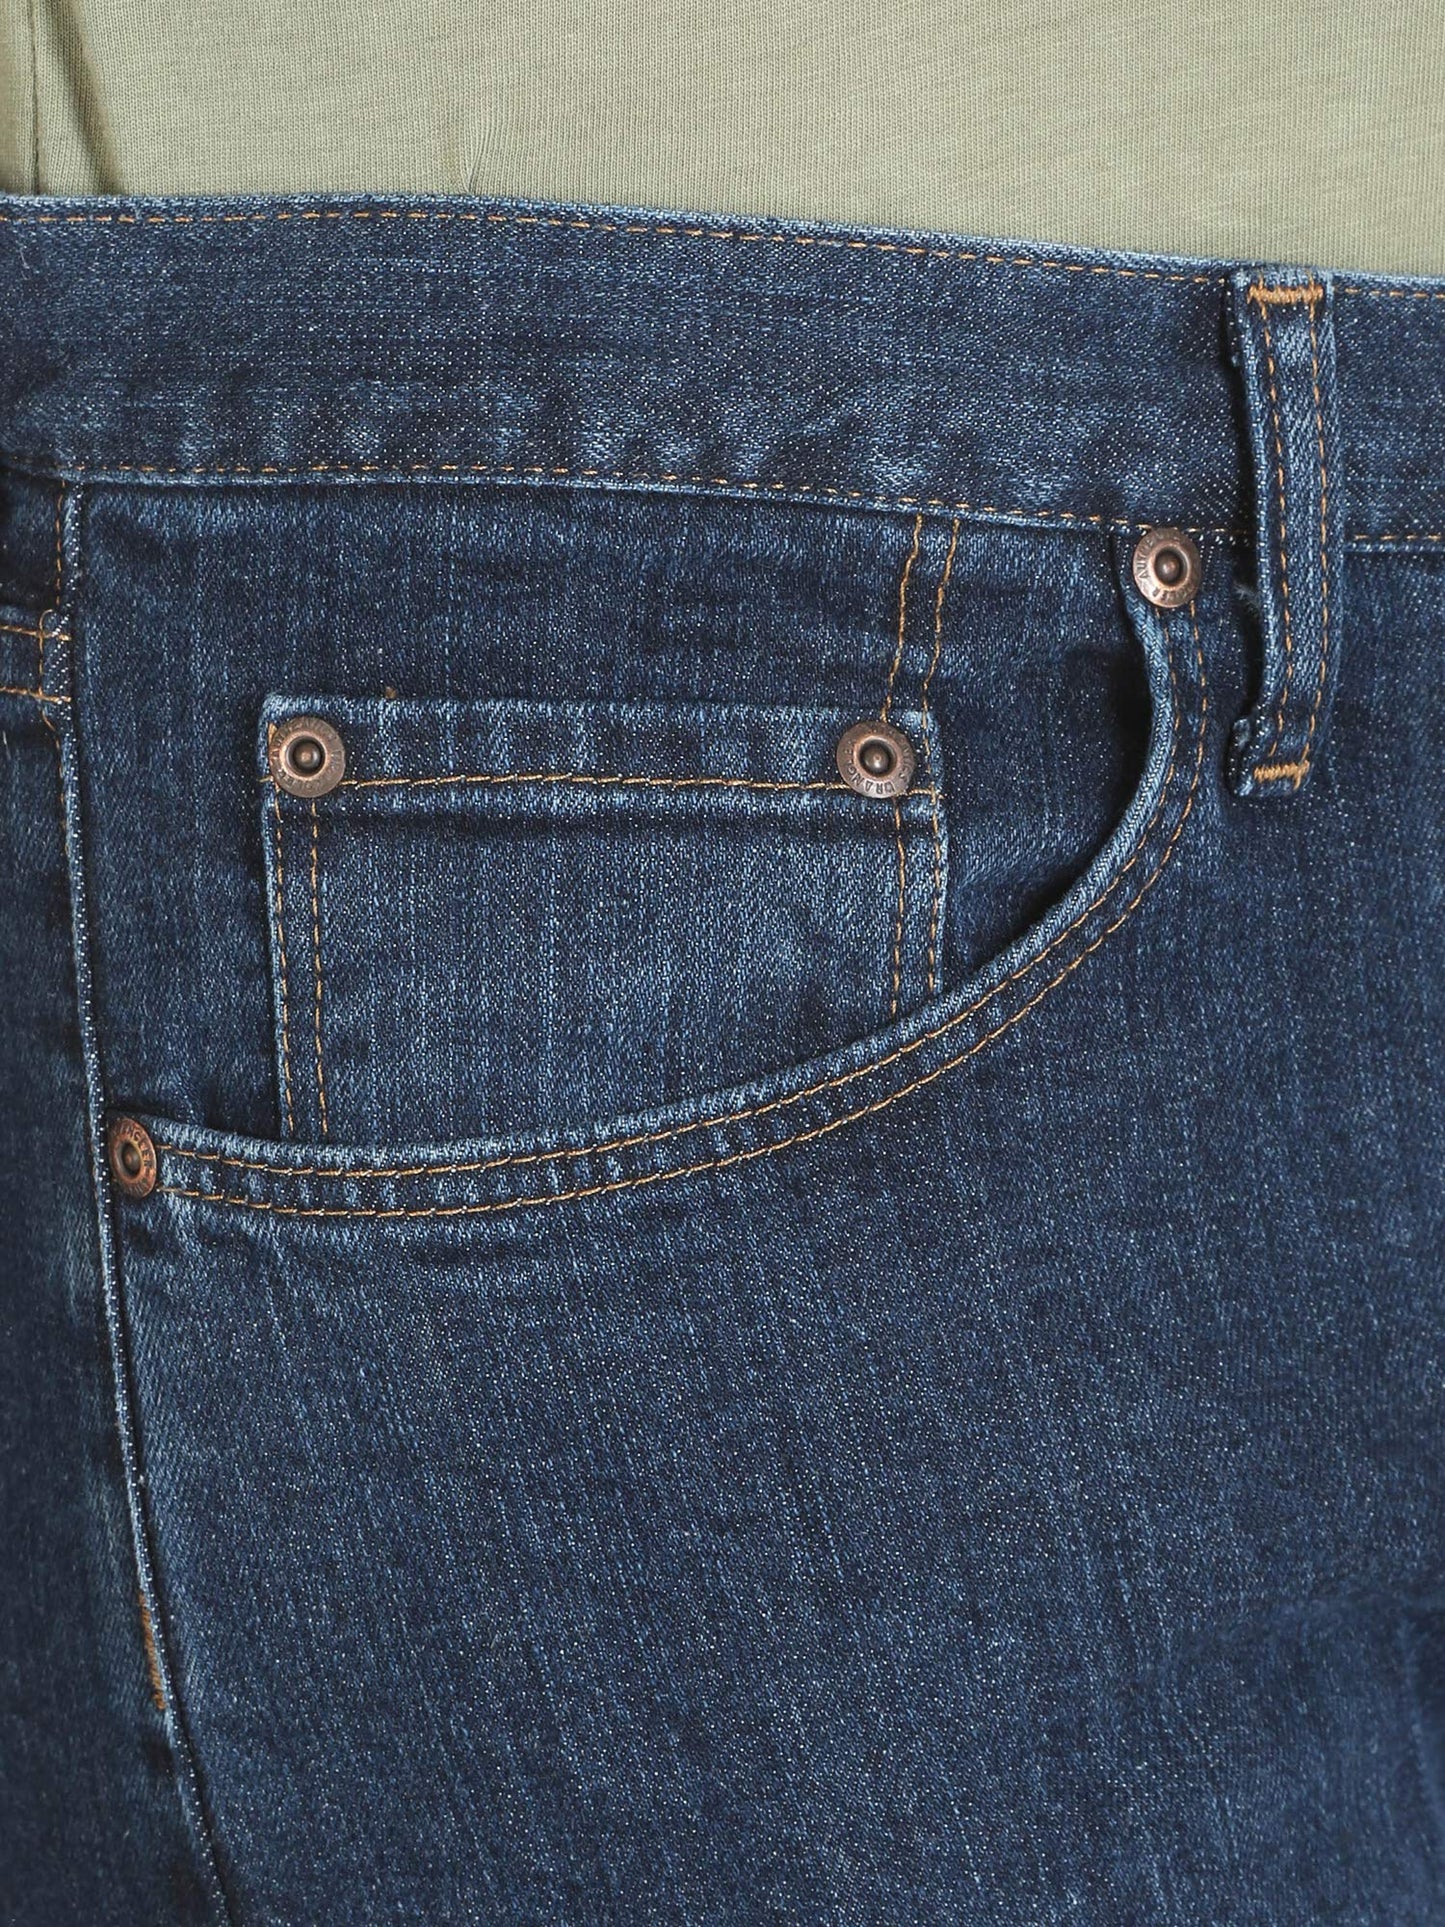 Wrangler Authentics Men's Classic 5-Pocket Regular Fit Jean, Dark Indigo Flex, 36W x 30L